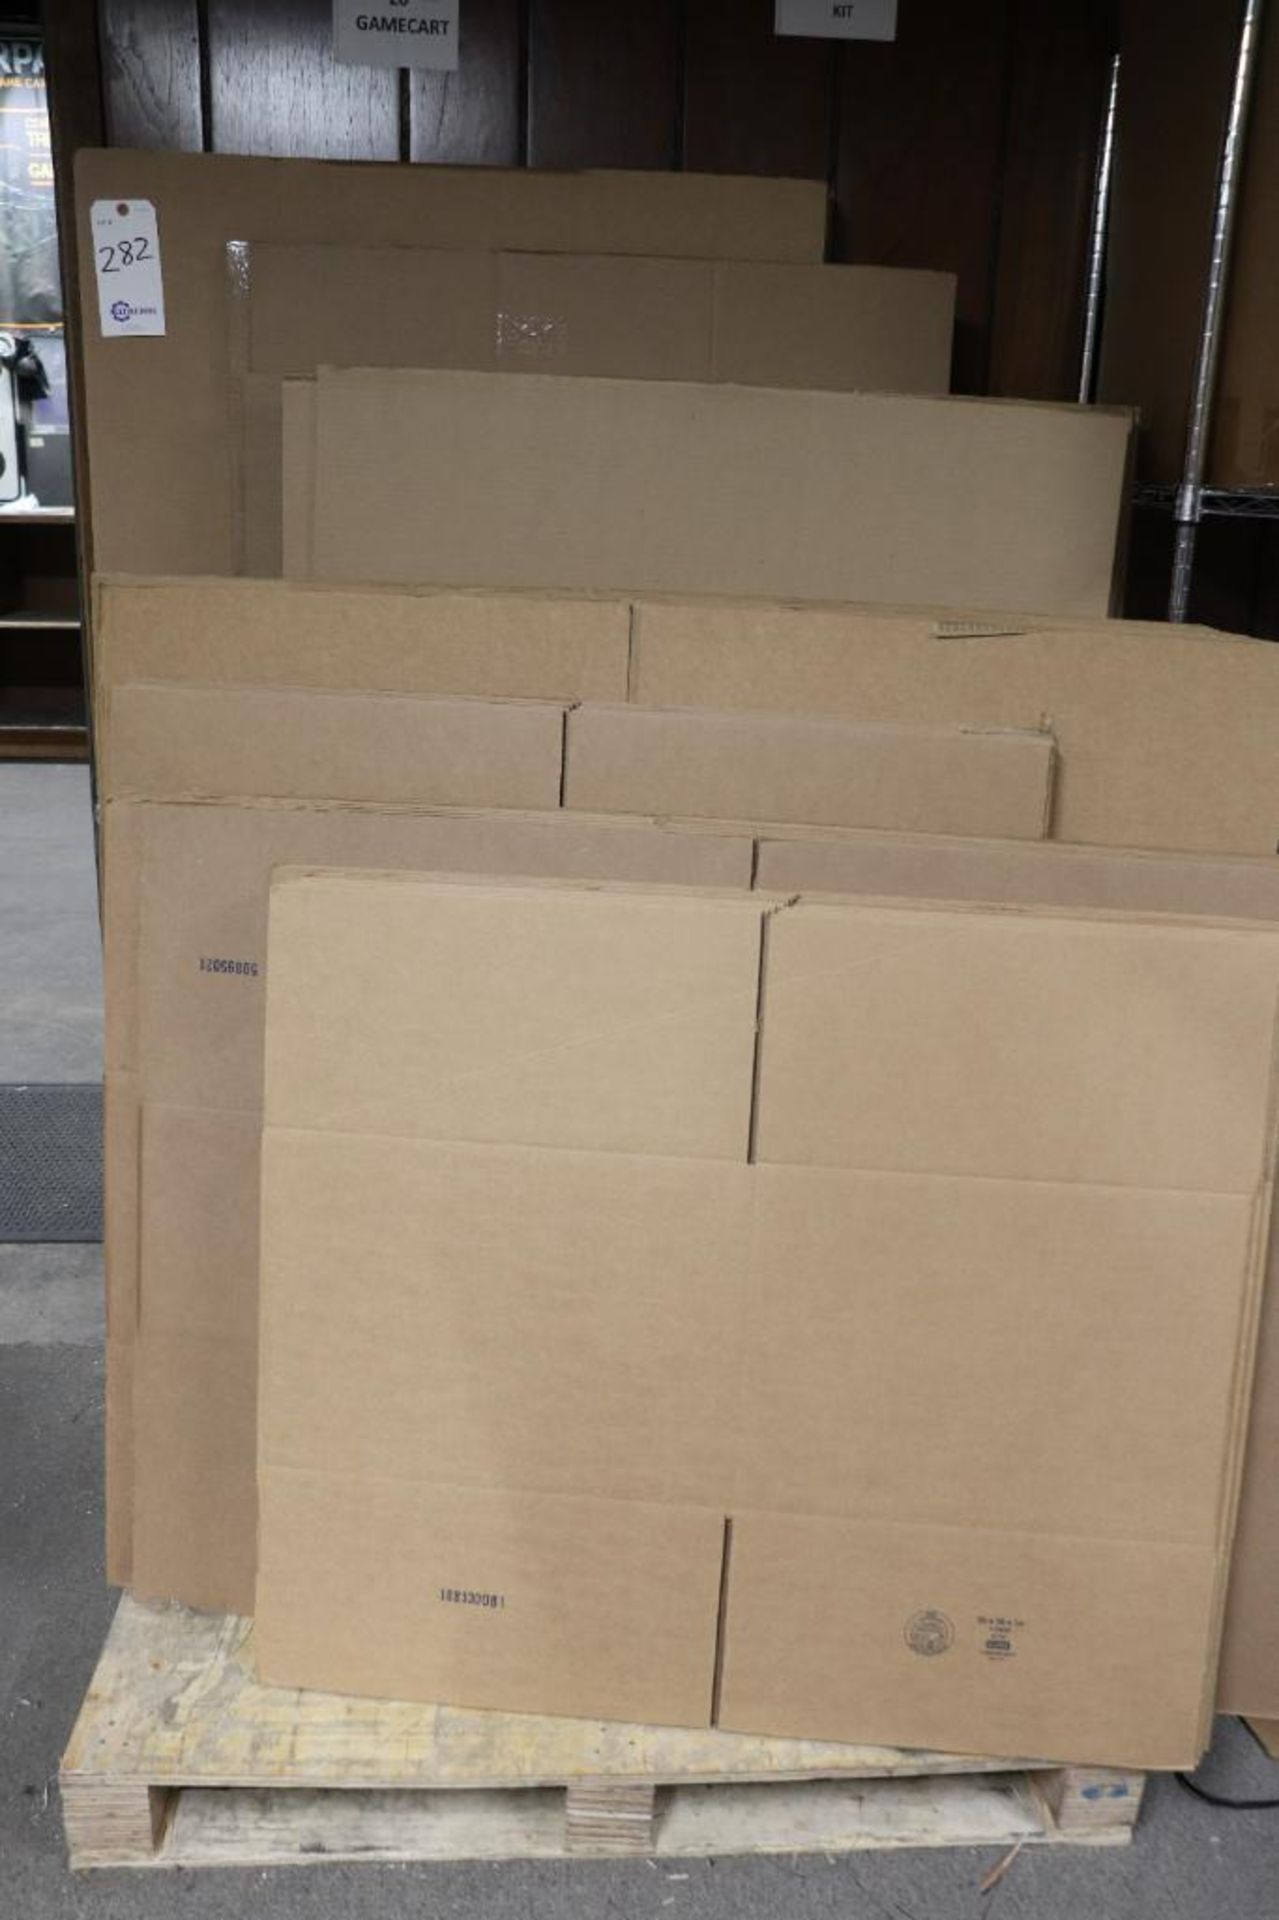 Uline cardboard boxes - Image 17 of 25